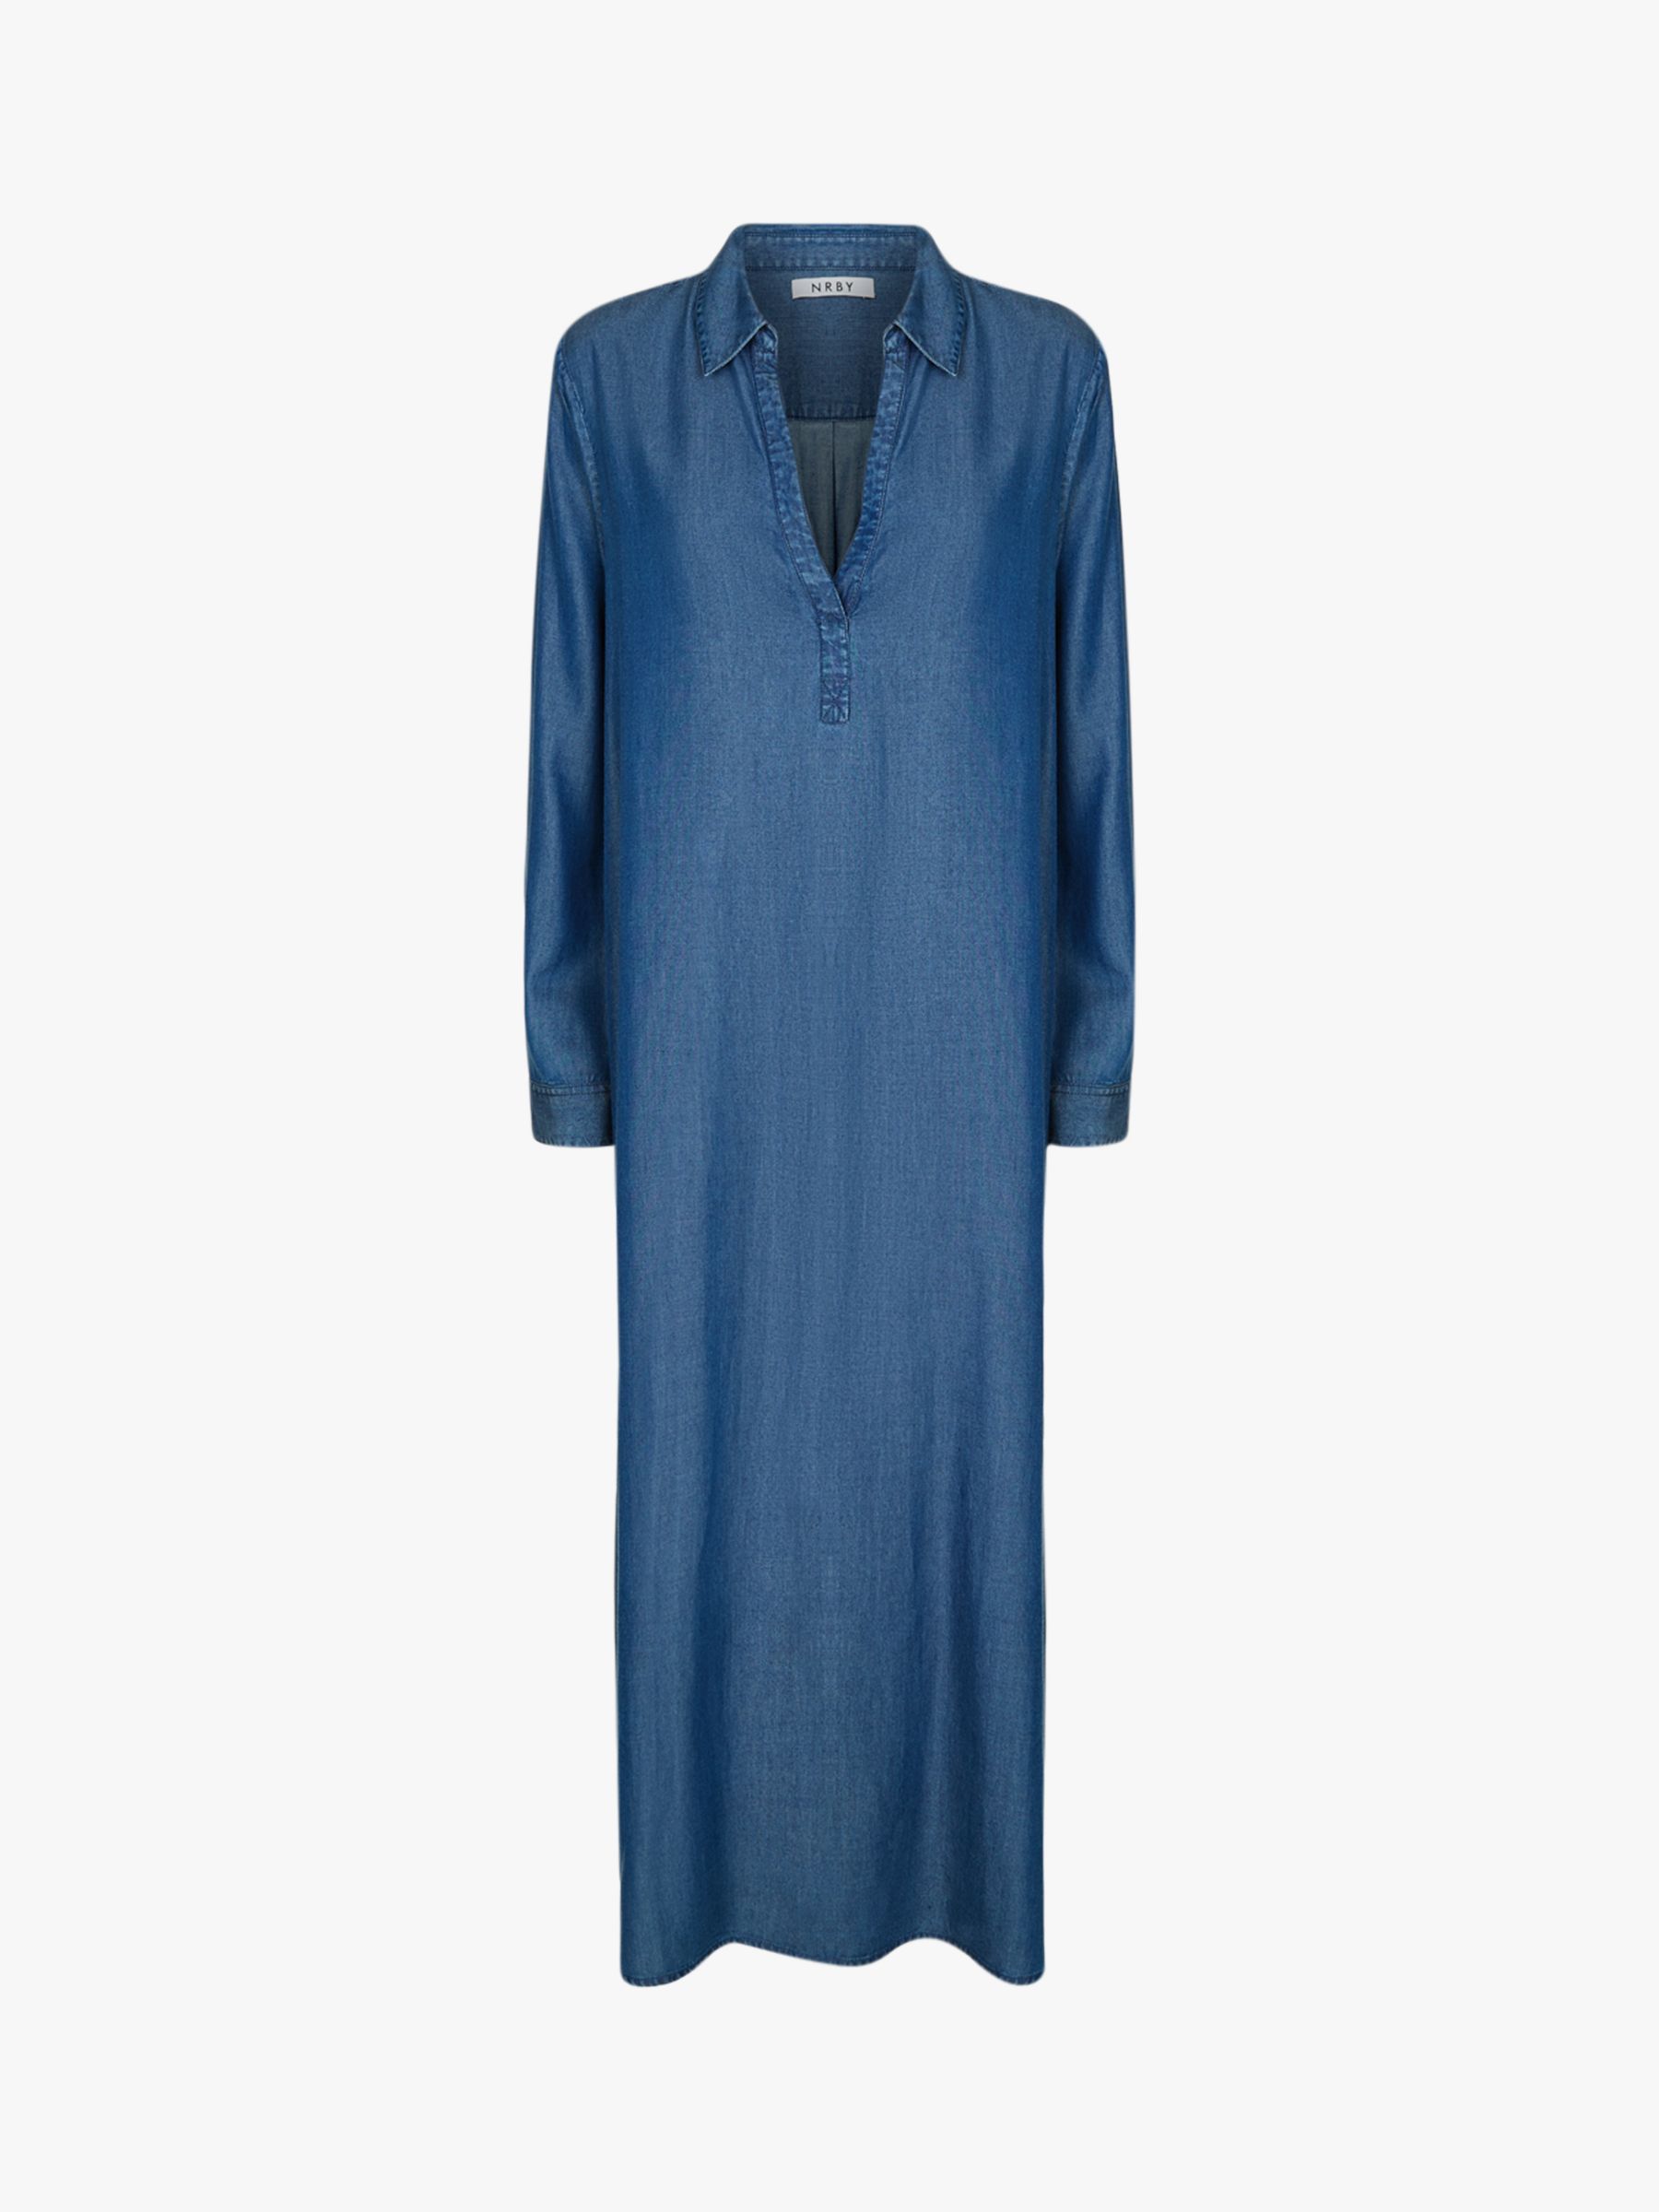 NRBY Chrissie Maxi Shirt Dress, Denim Blue